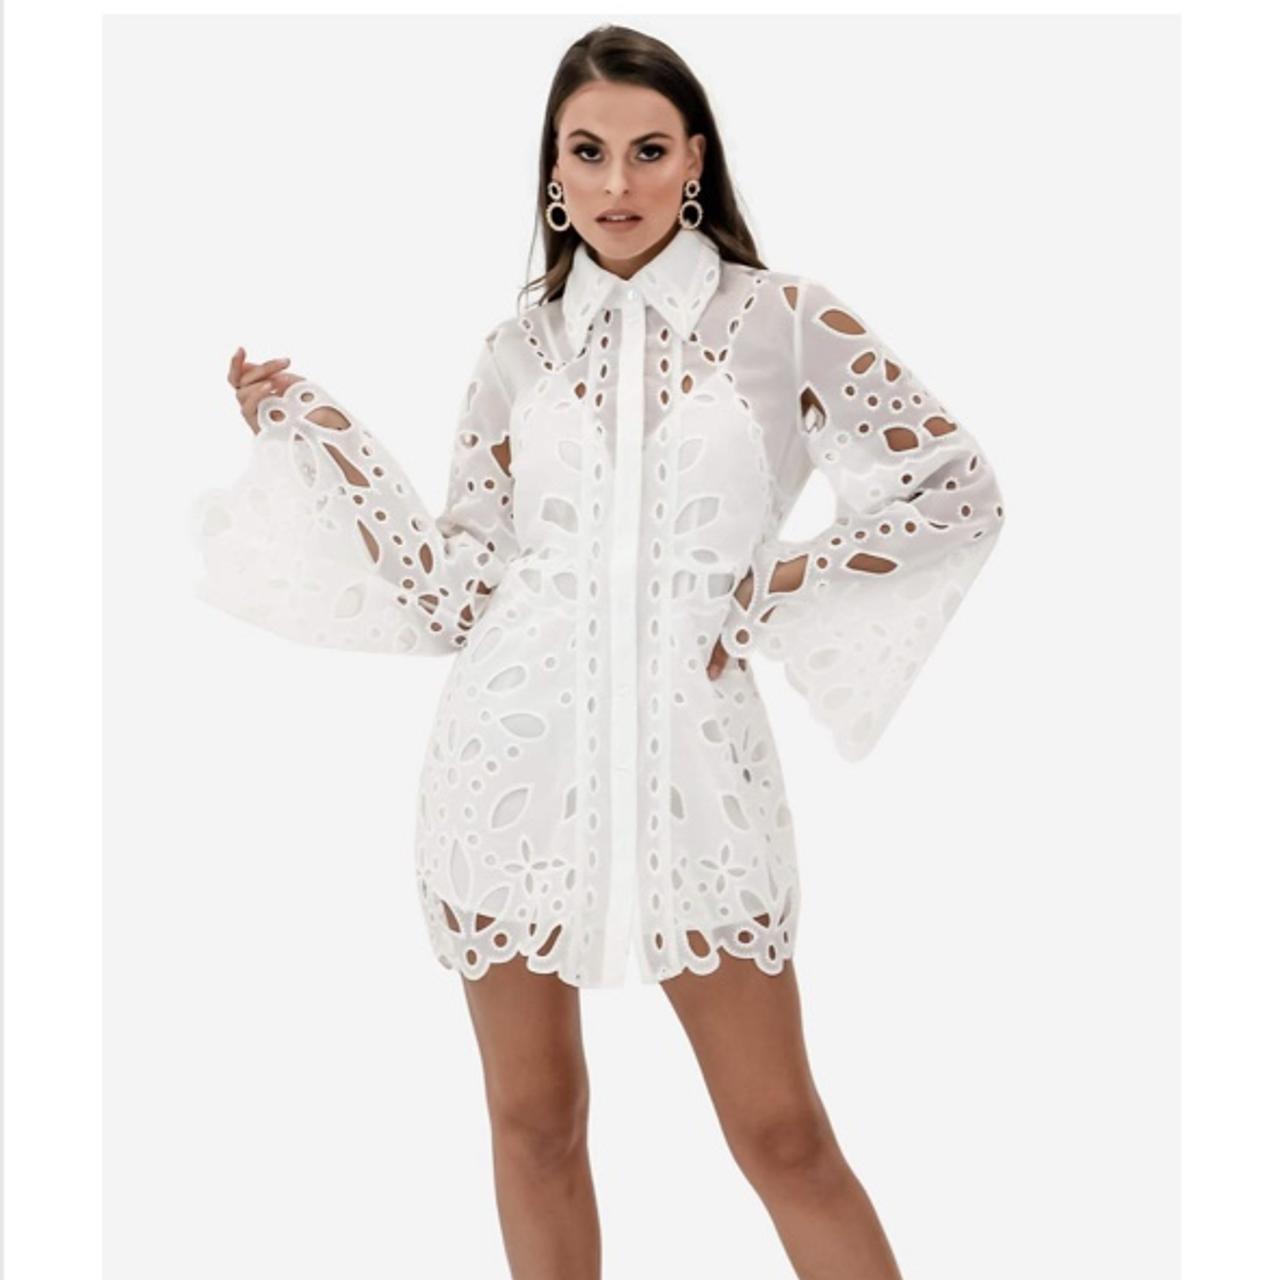 Looking to buy!! ALICE MCCALL BAUDELAIRE DRESS! Size... - Depop